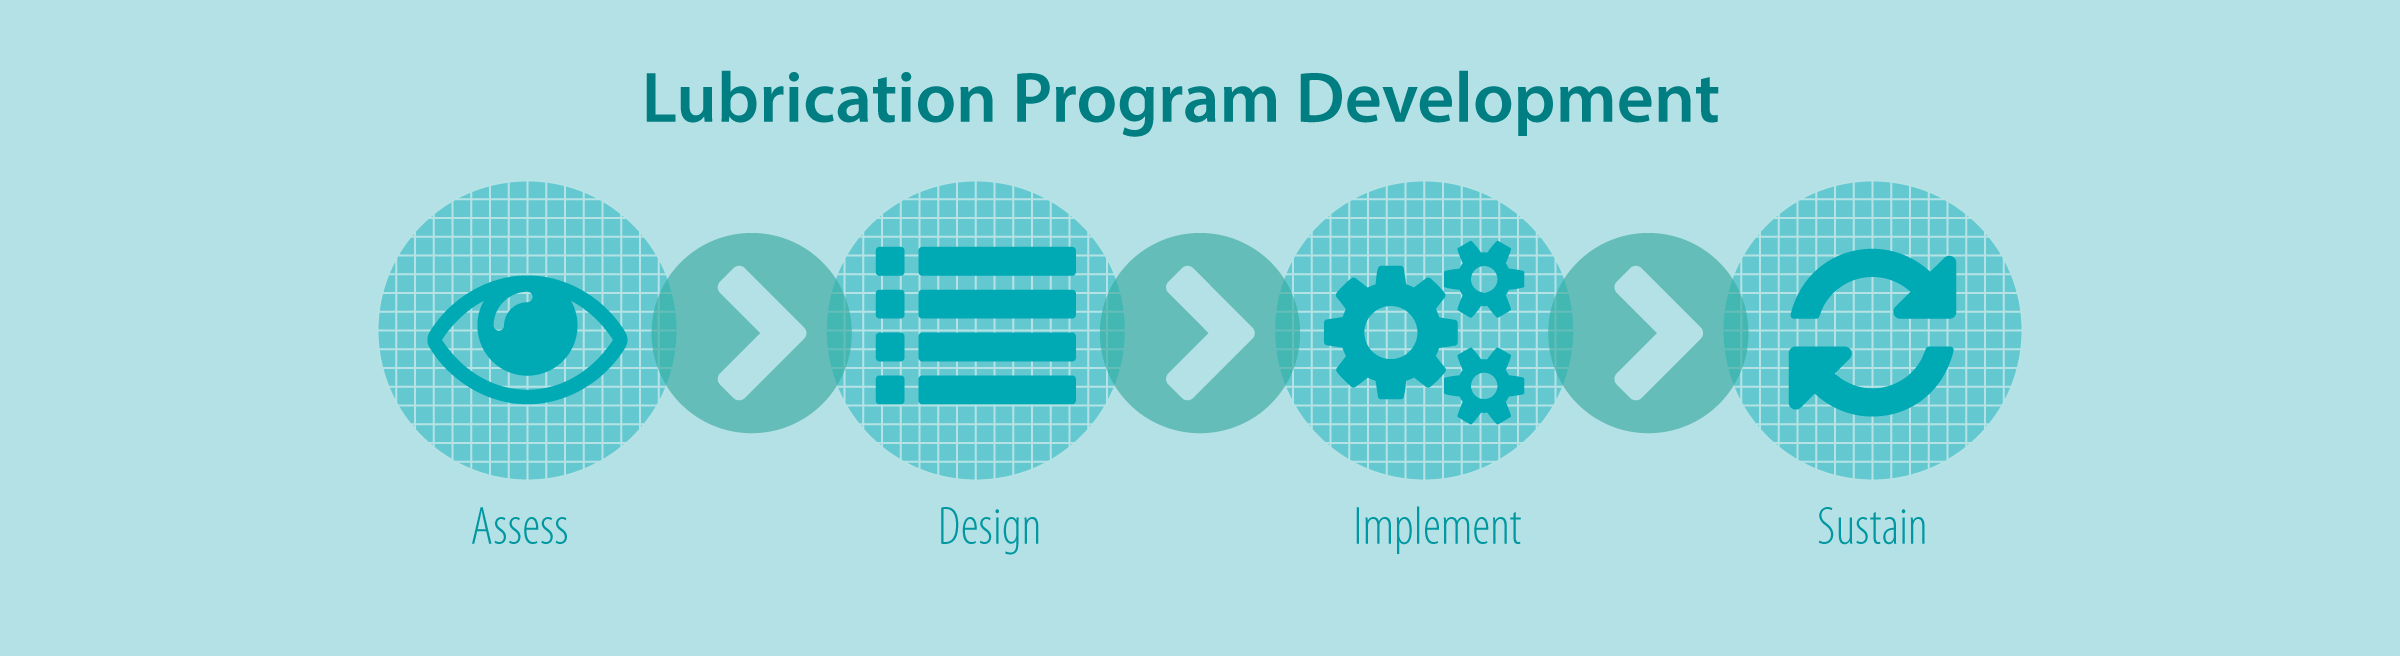 Lubrication Program Development